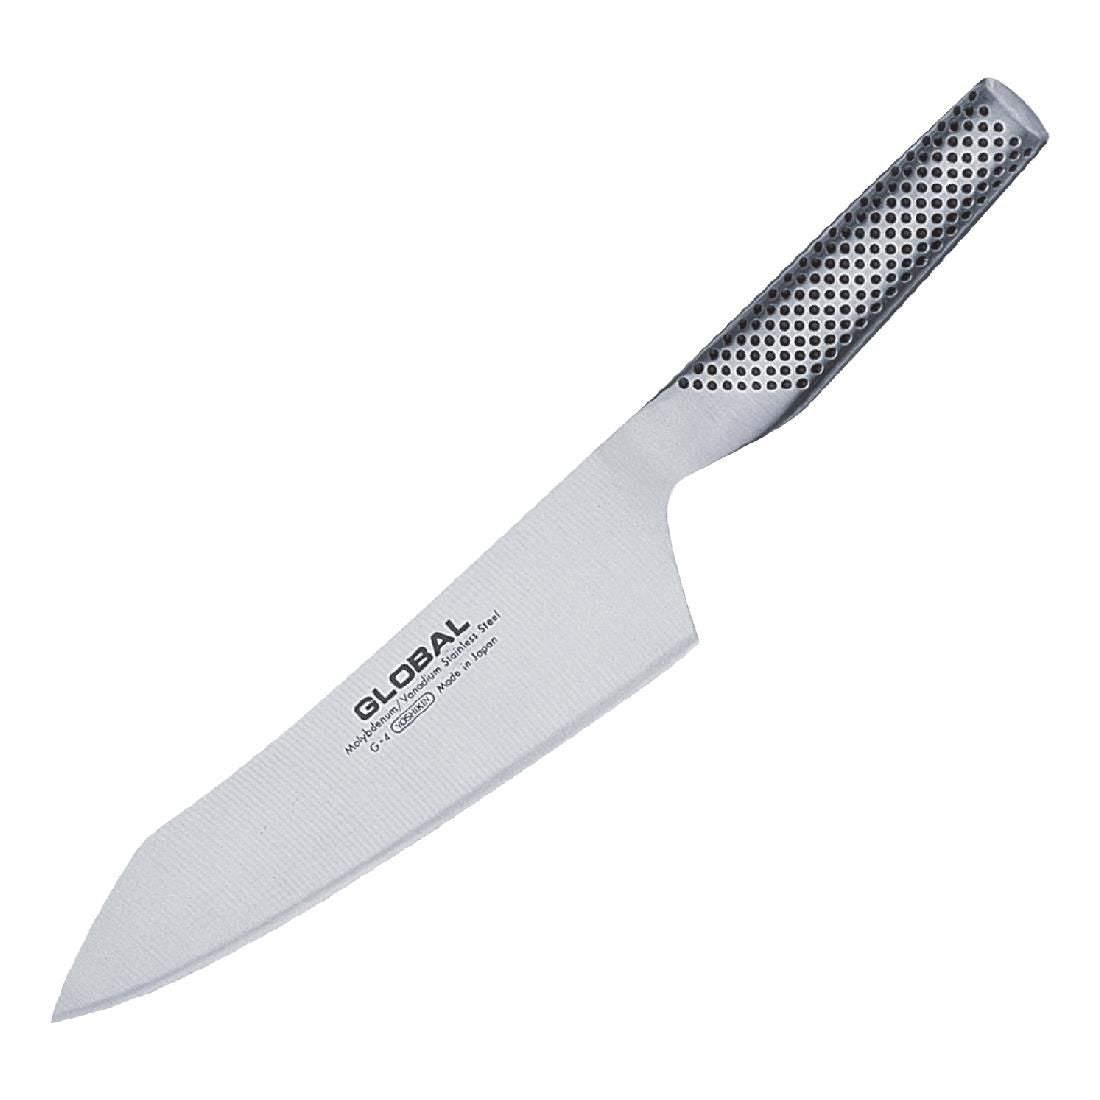 Global G 4 Oriental Chefs Knife 18cm JD Catering Equipment Solutions Ltd